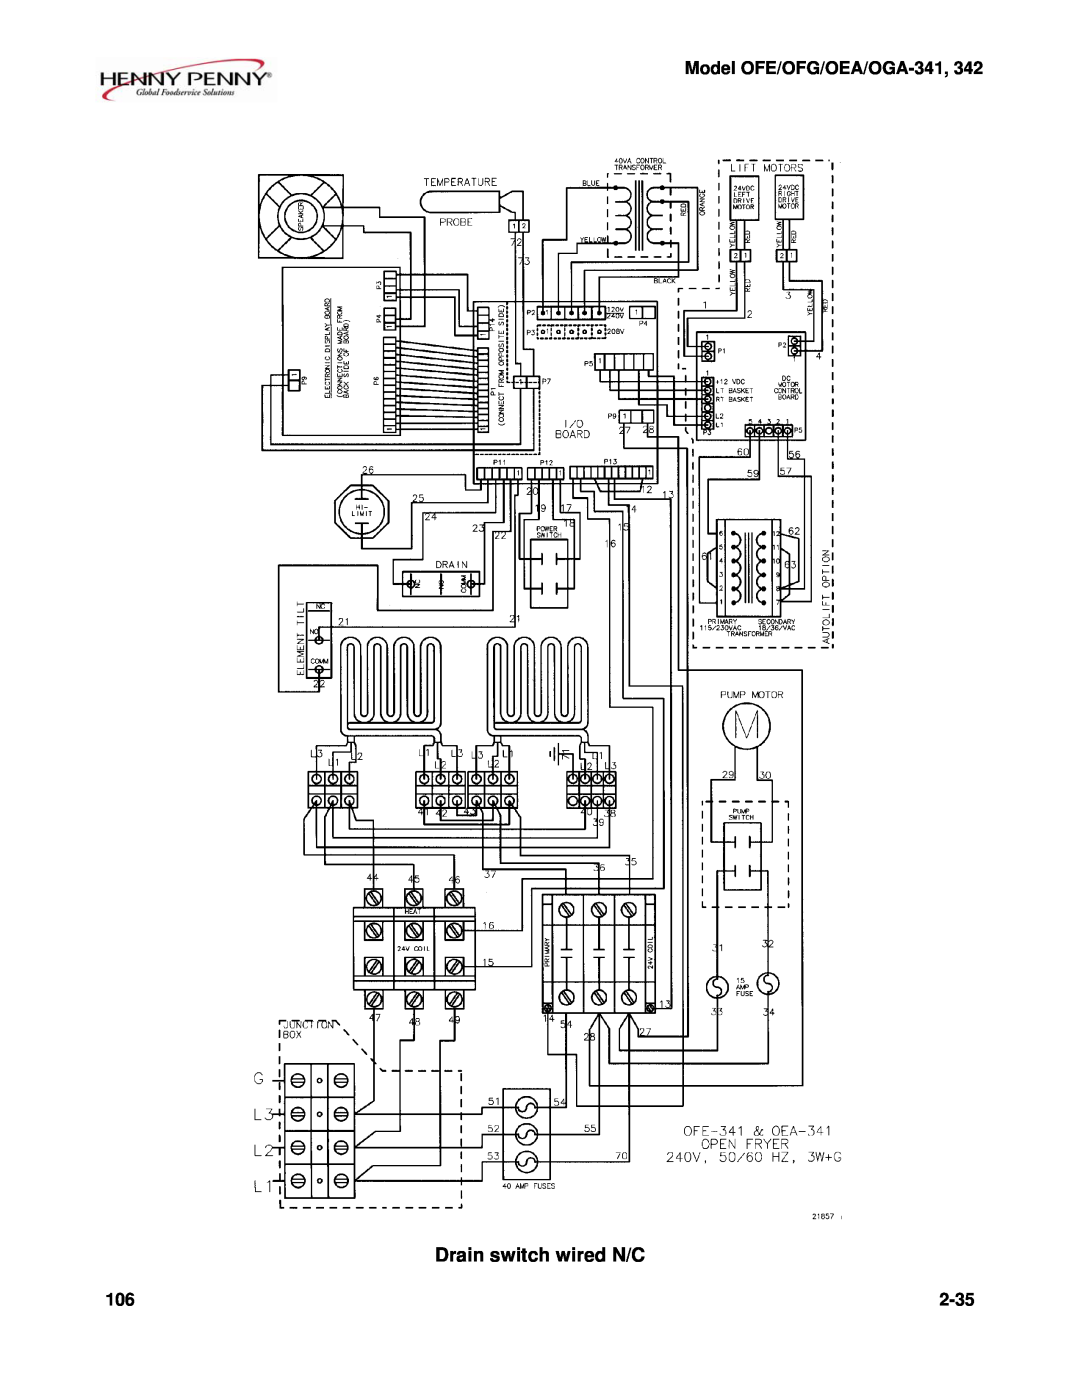 Henny Penny OFE/OFG-341, OFE/OFG-342, OEA/OGA-342 Drain switch wired N/C, Model OFE/OFG/OEA/OGA-341,342, 2-35 